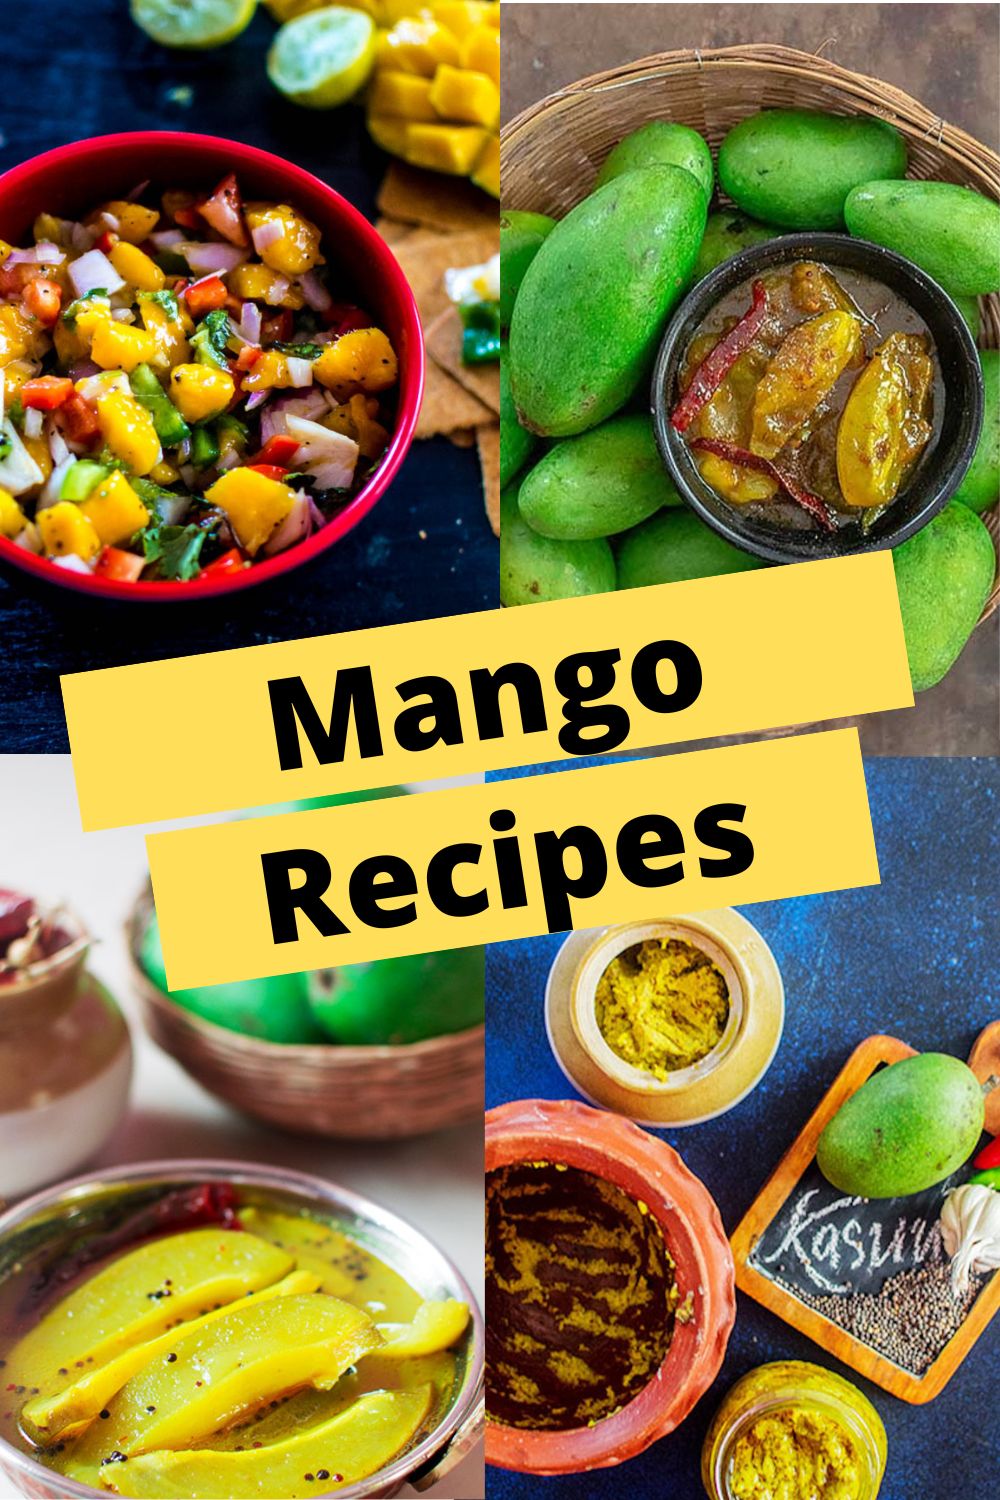 %Must-try mango recipes debjanir rannaghar Summer Collage Pinterest Pin